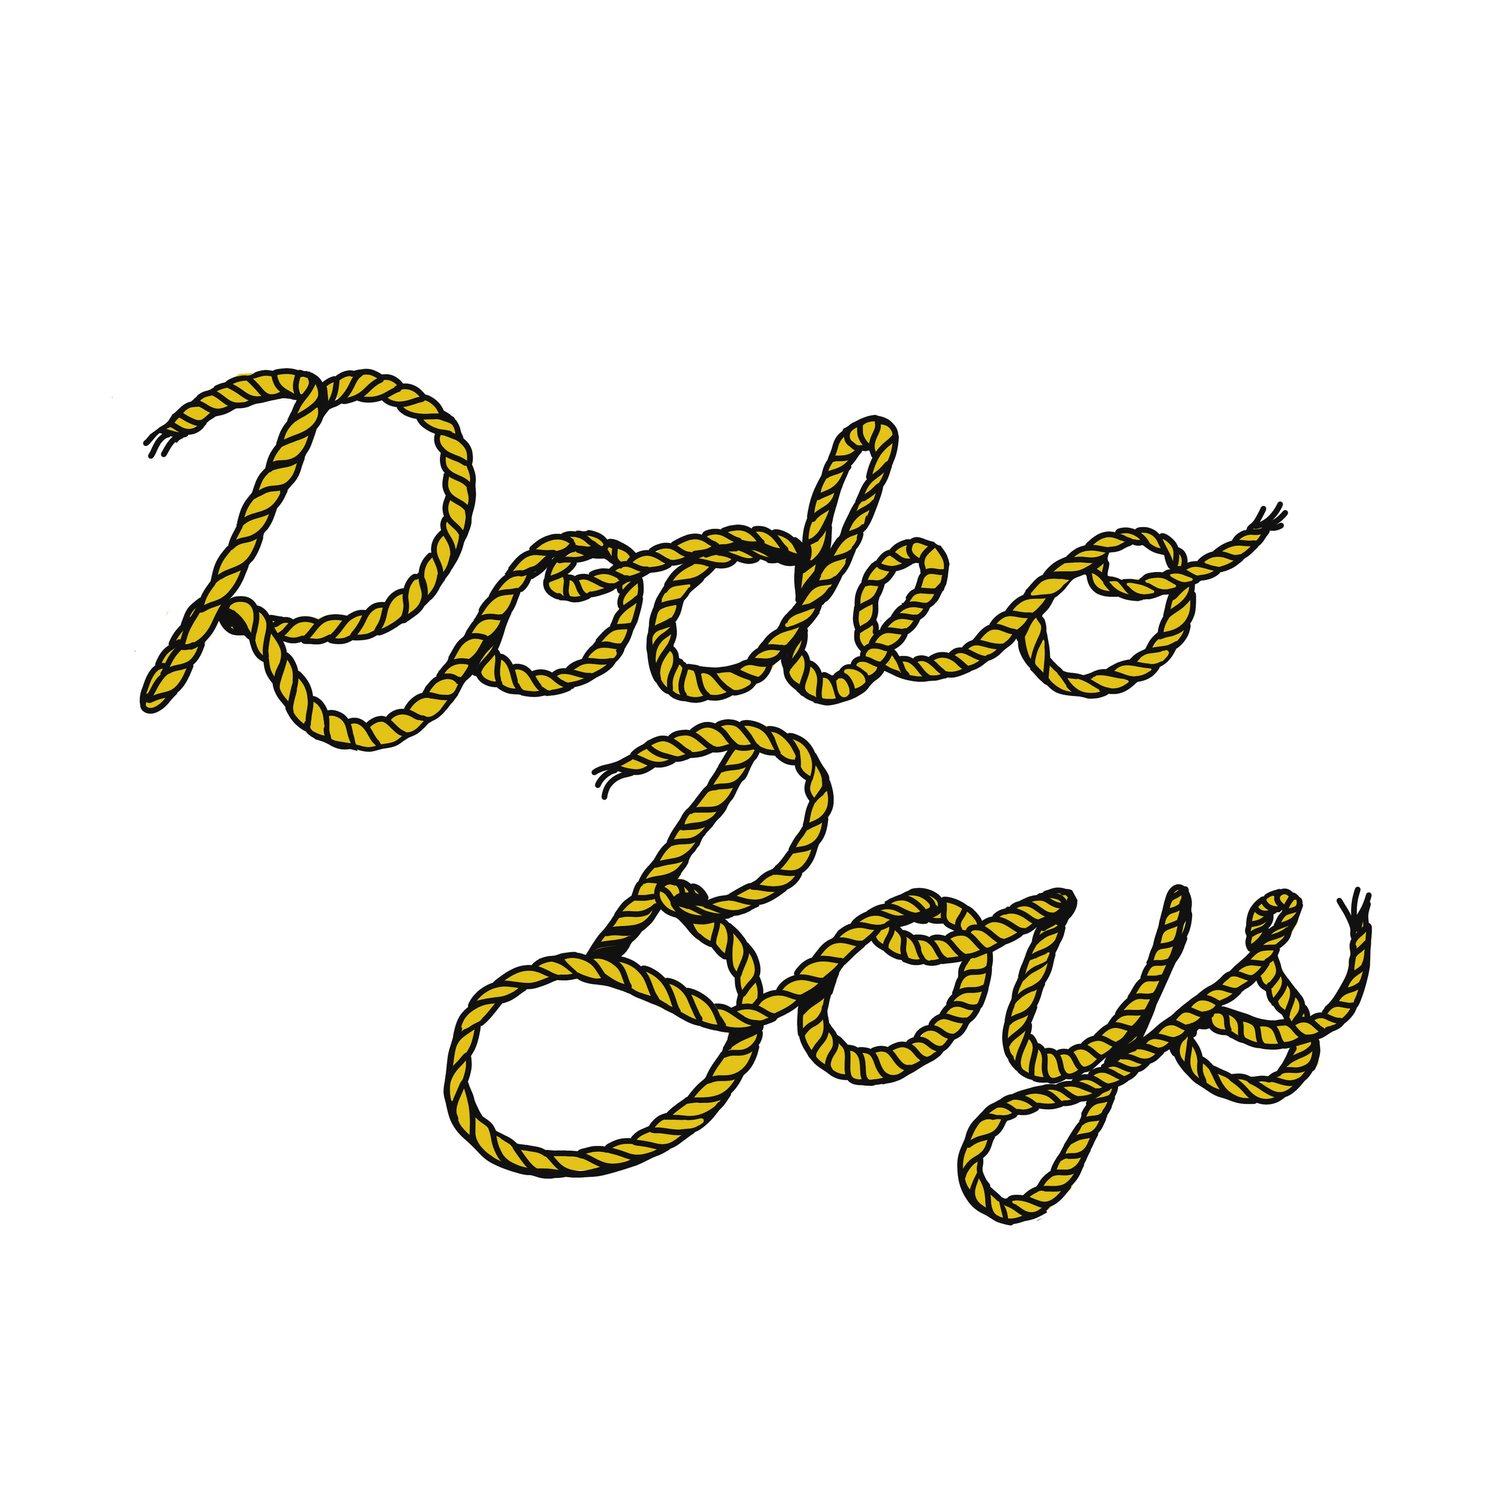 Rodeo Boys